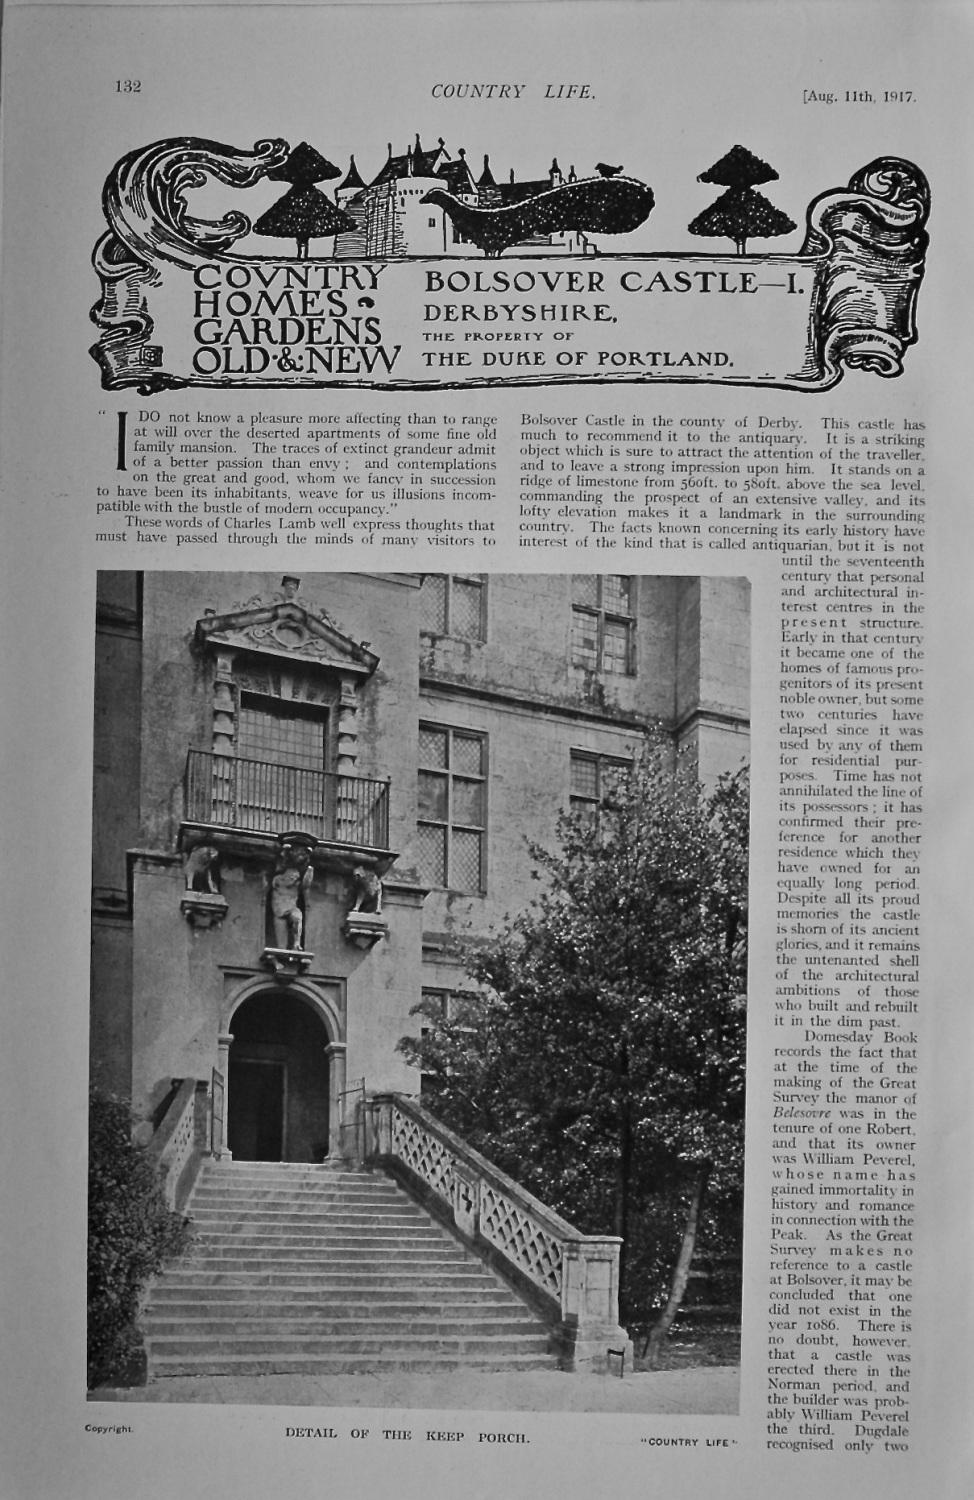 Country Life - Bolsover Castle 1917